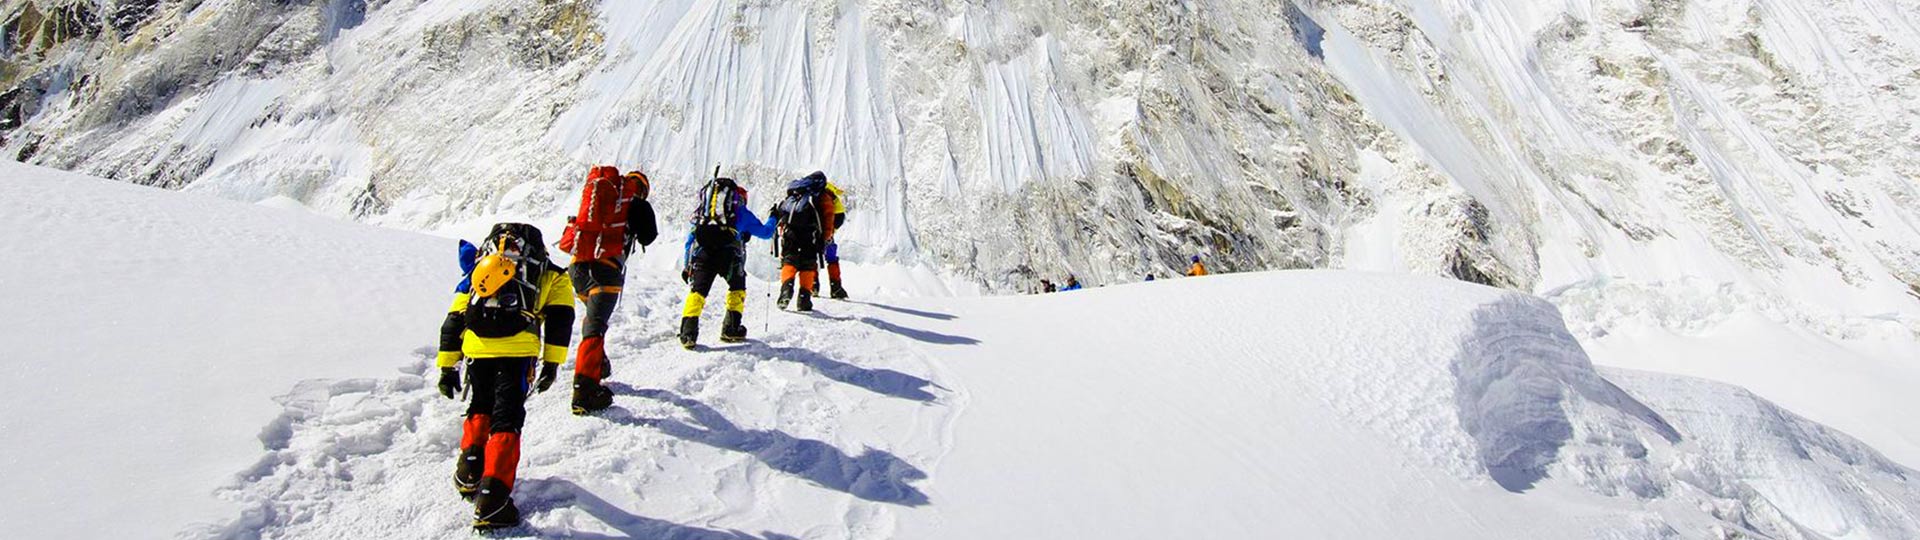 Mount Everest Climbing Expedition via Northeast Ridge in Tibet 